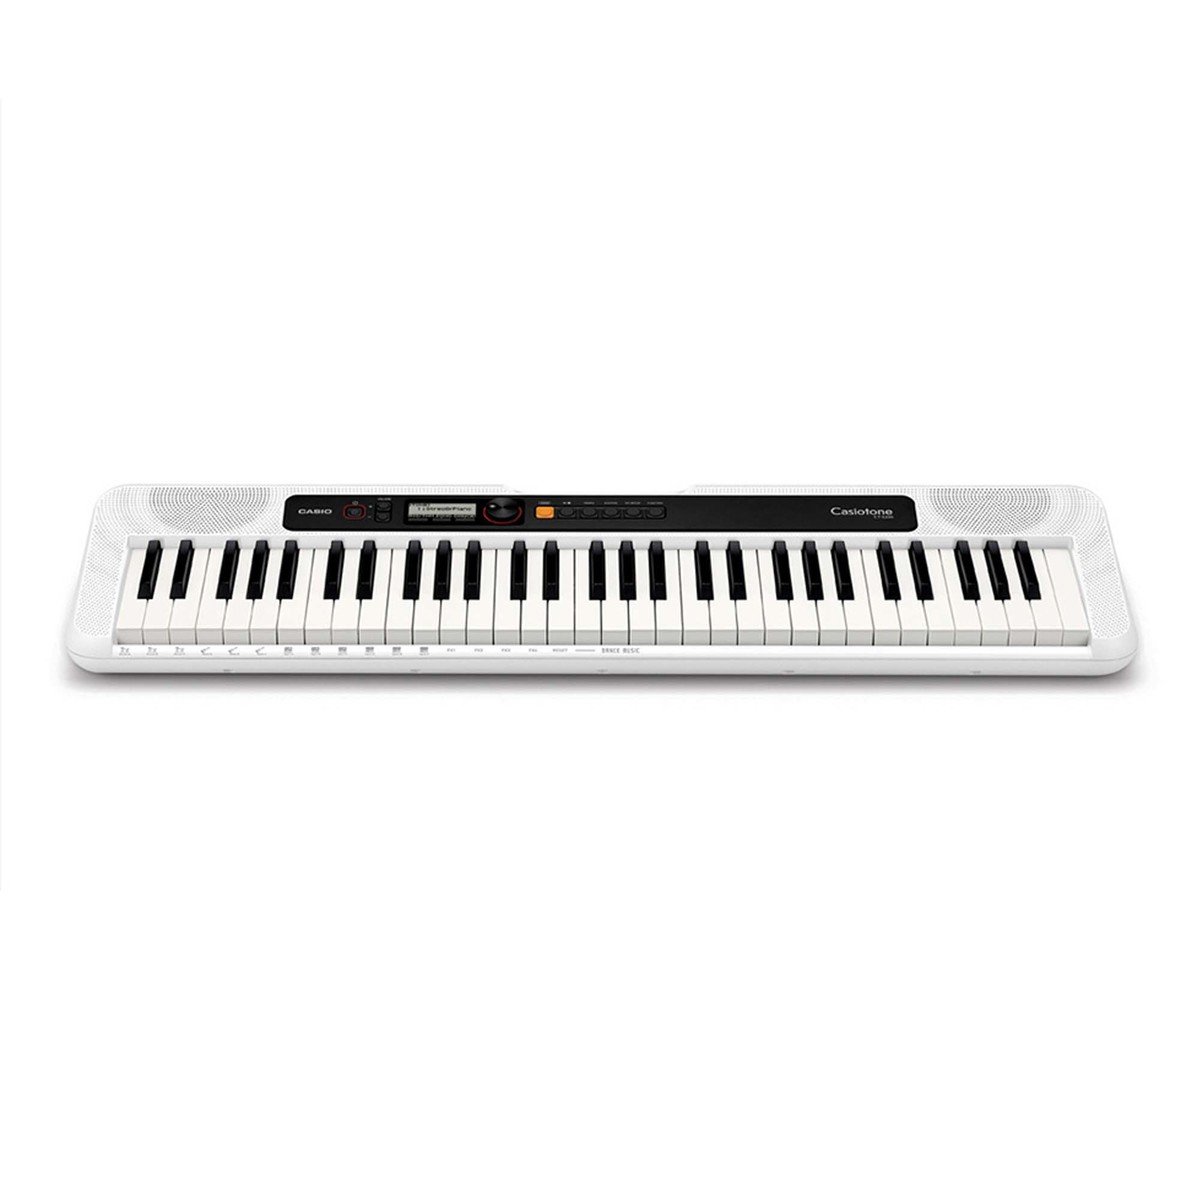 Casio Keyboard CTS-200 White